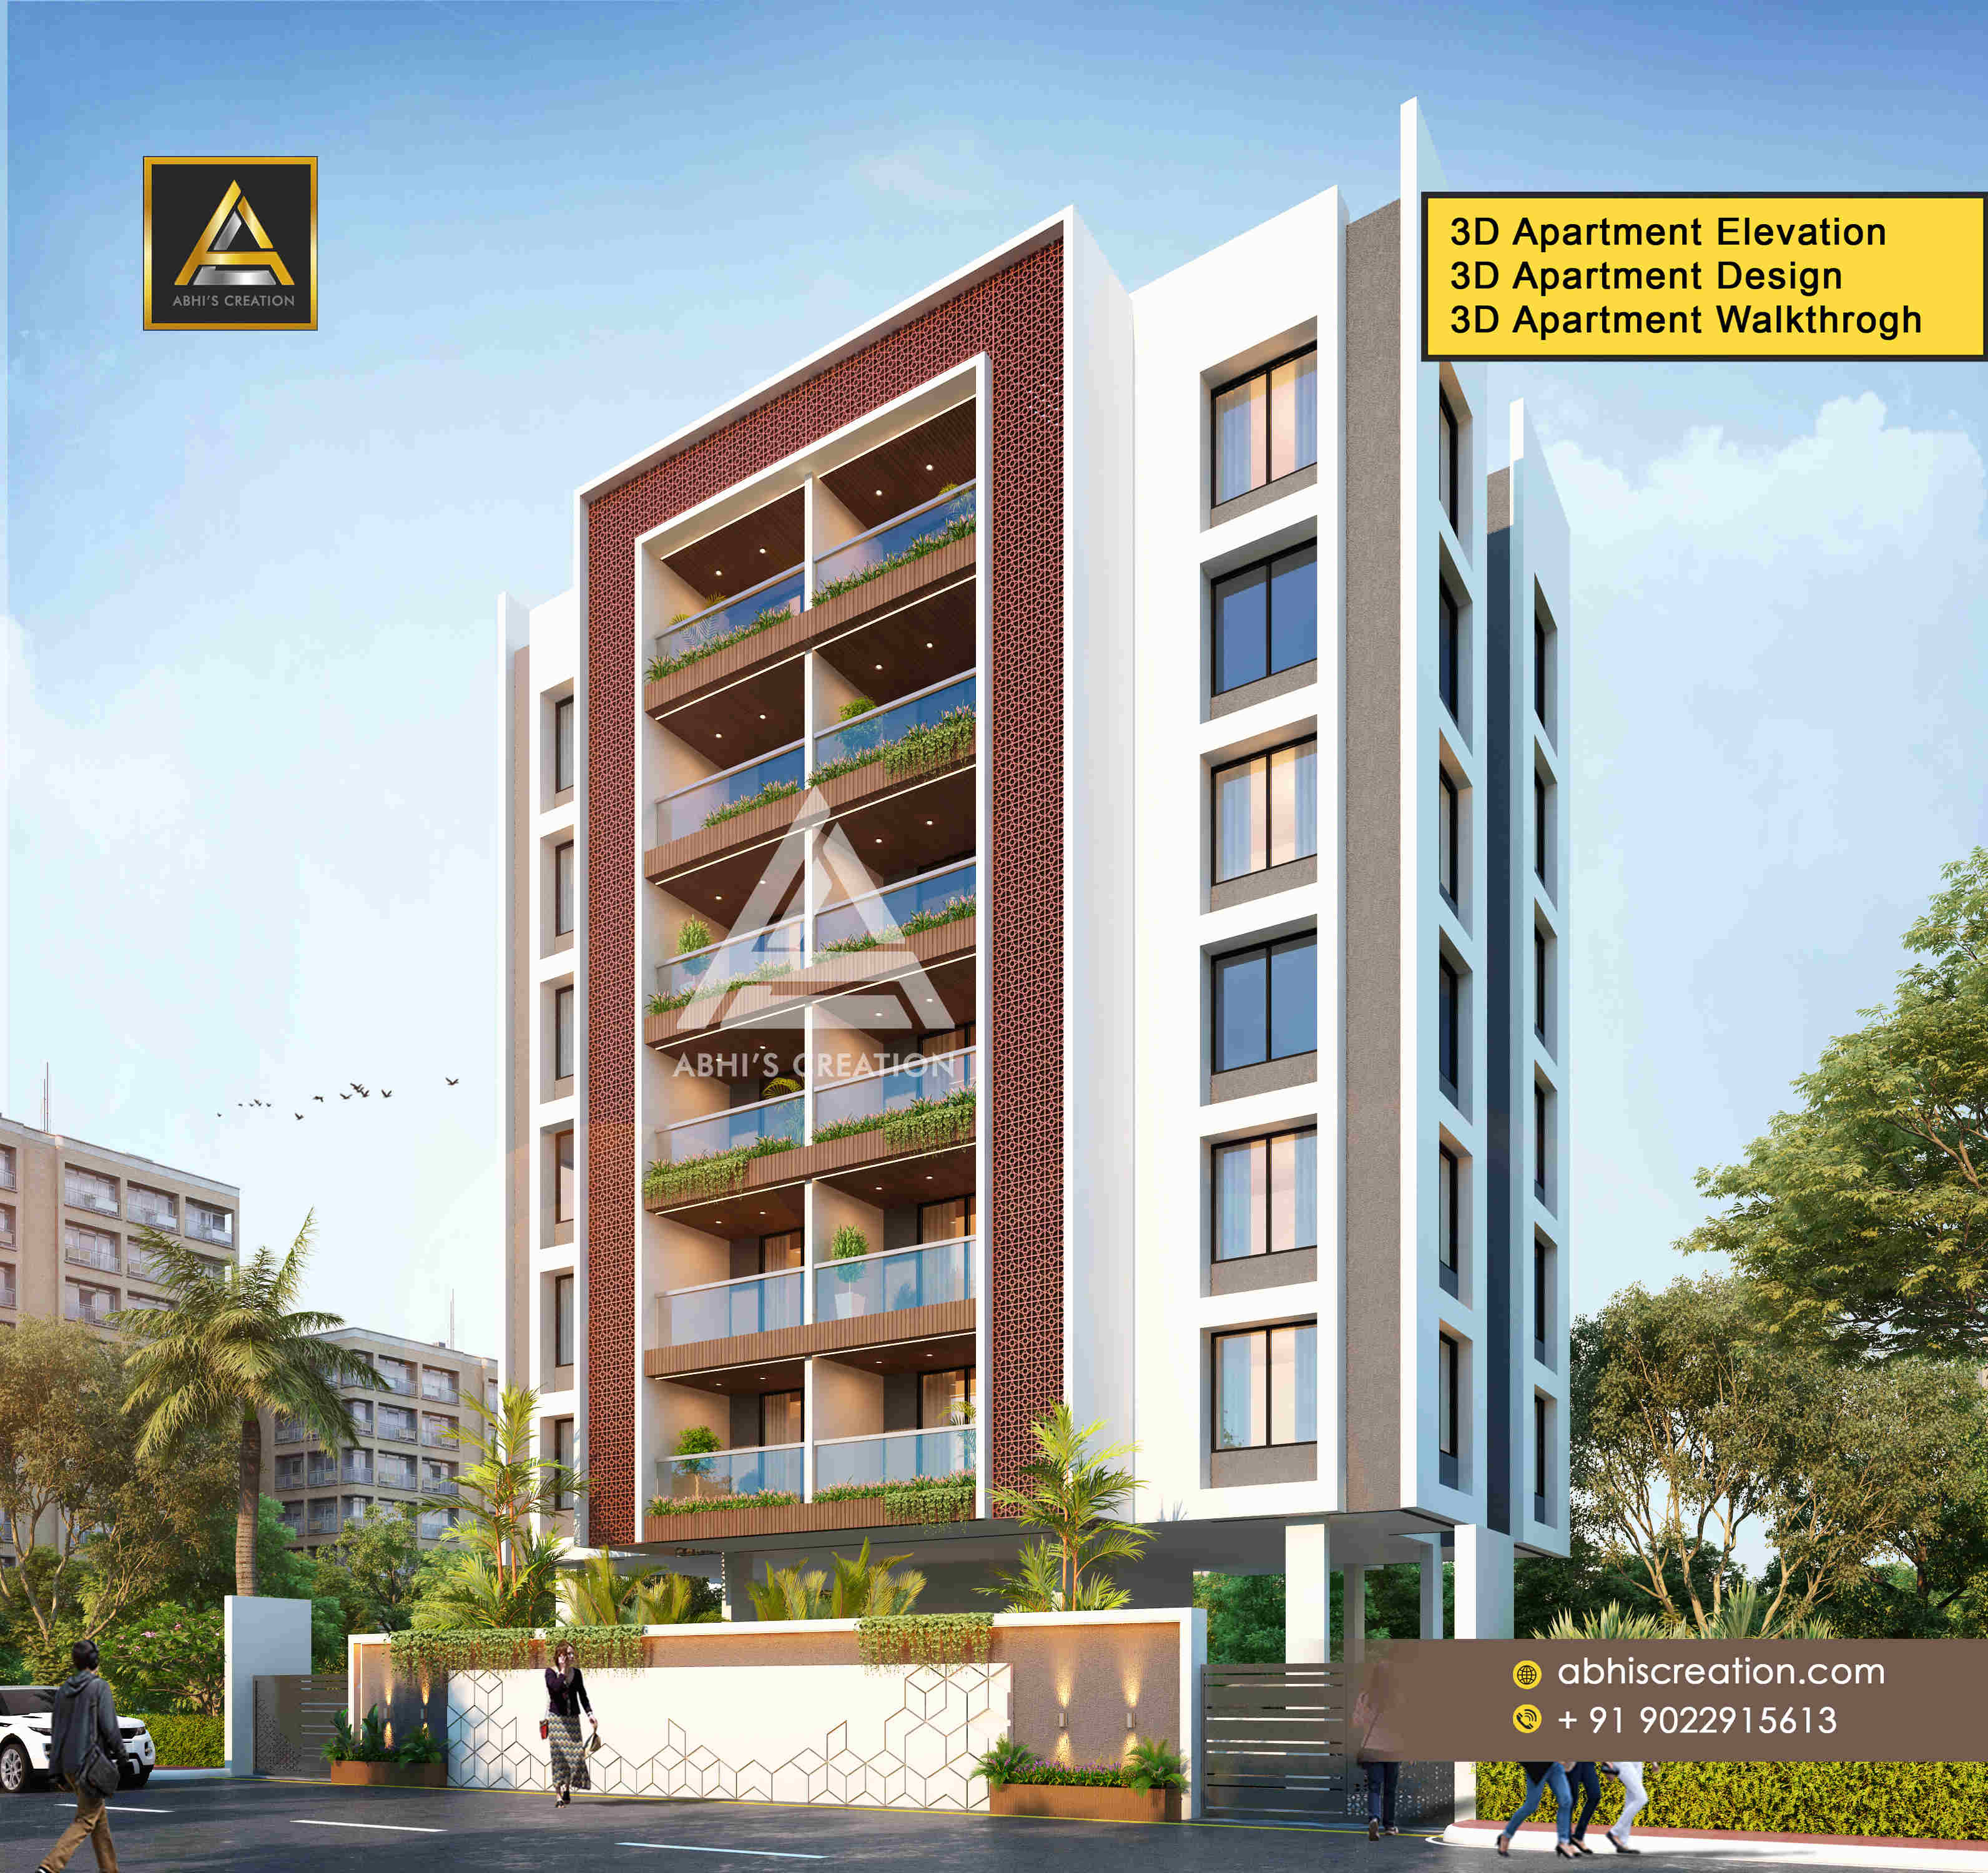 elegant-House-Elevation-apartment-architectural-visualization-abhis-creation-3d-architectural-rendering-services.jpg